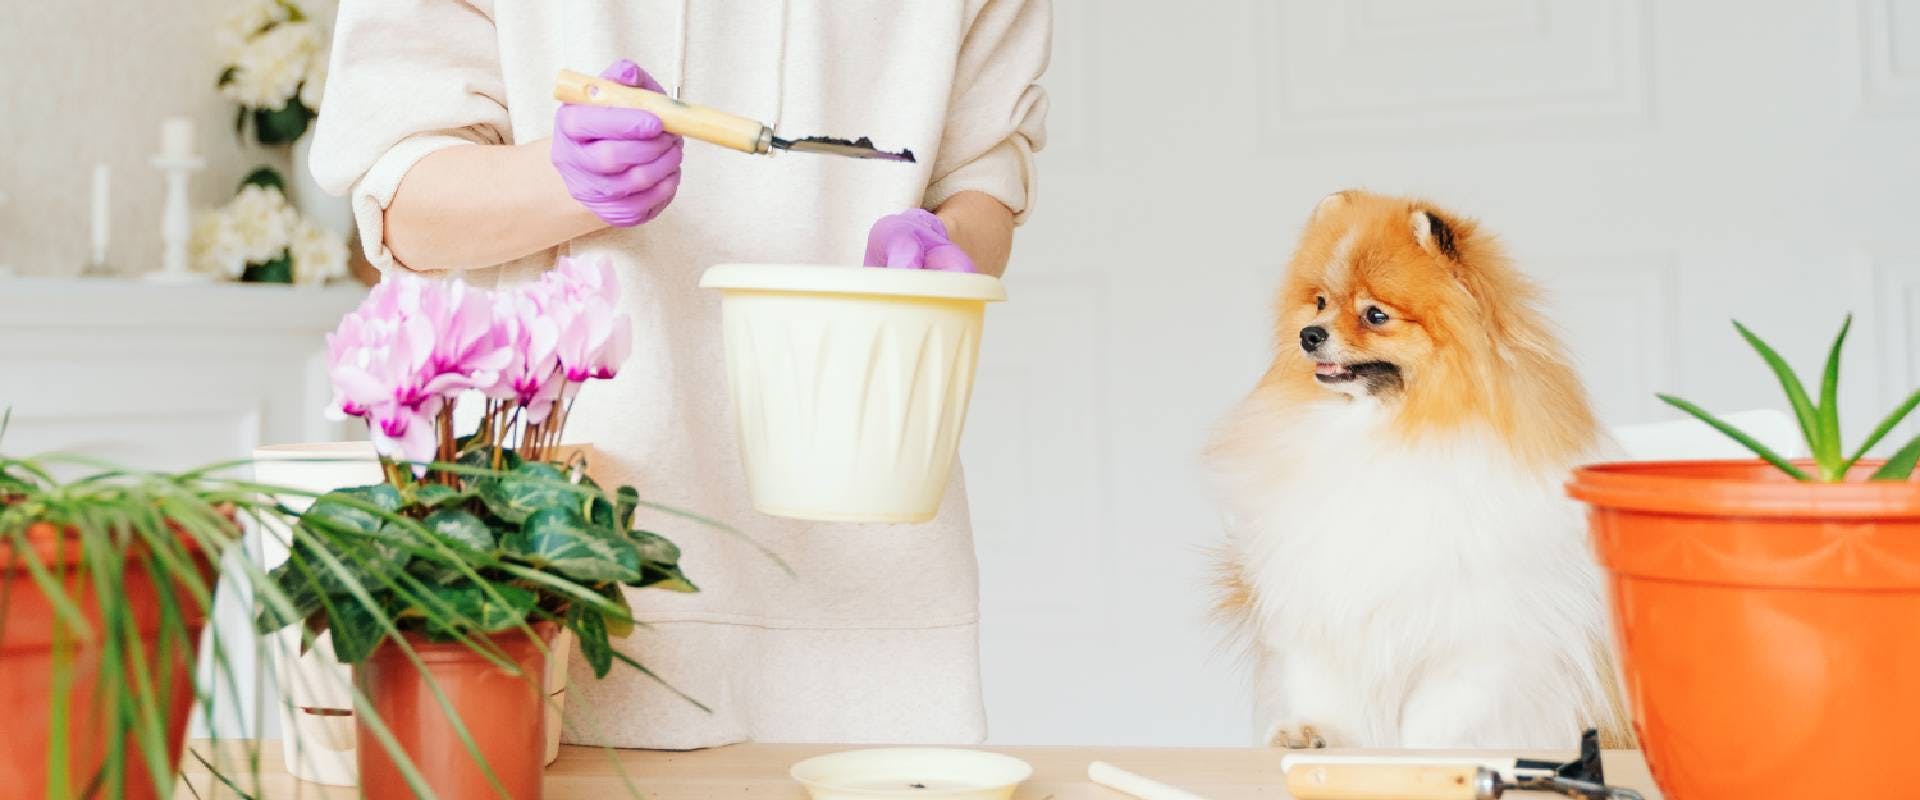 Person potting cyclamen with a Pomeranian dog watching